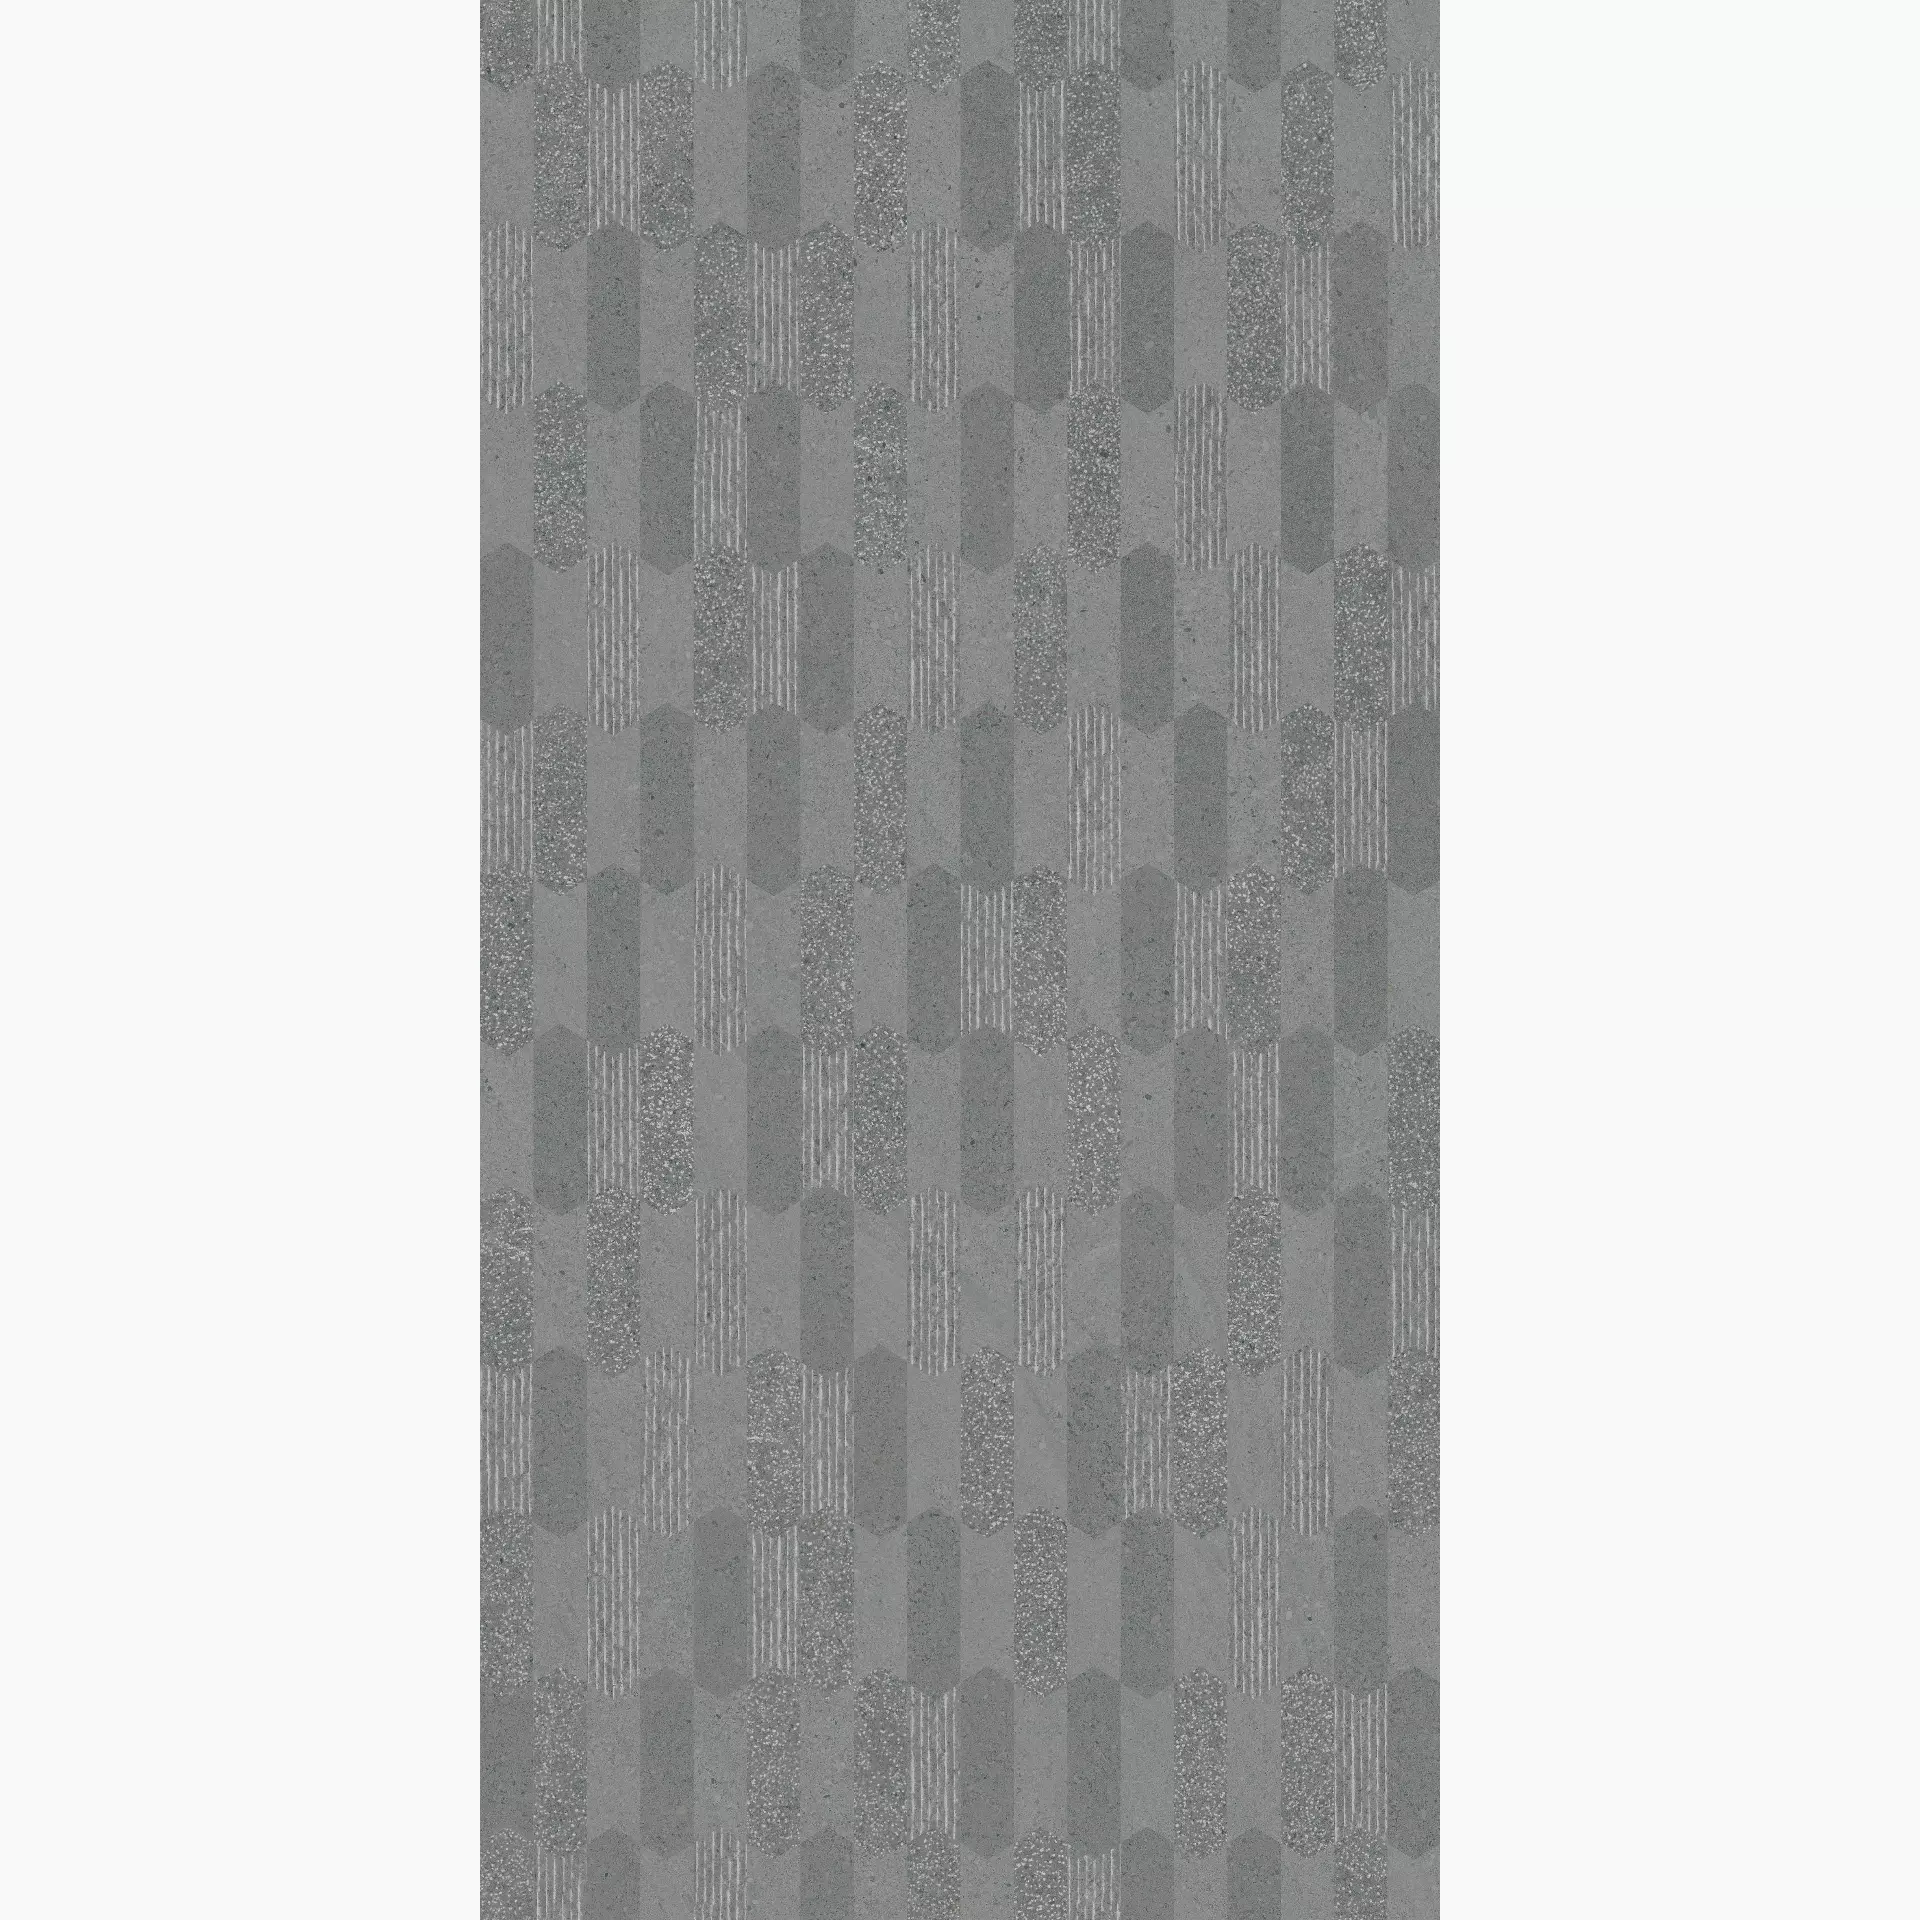 Flaviker Rockin Grey Naturale Decor Lozenge PF60010126 60x120cm rectified 8,5mm